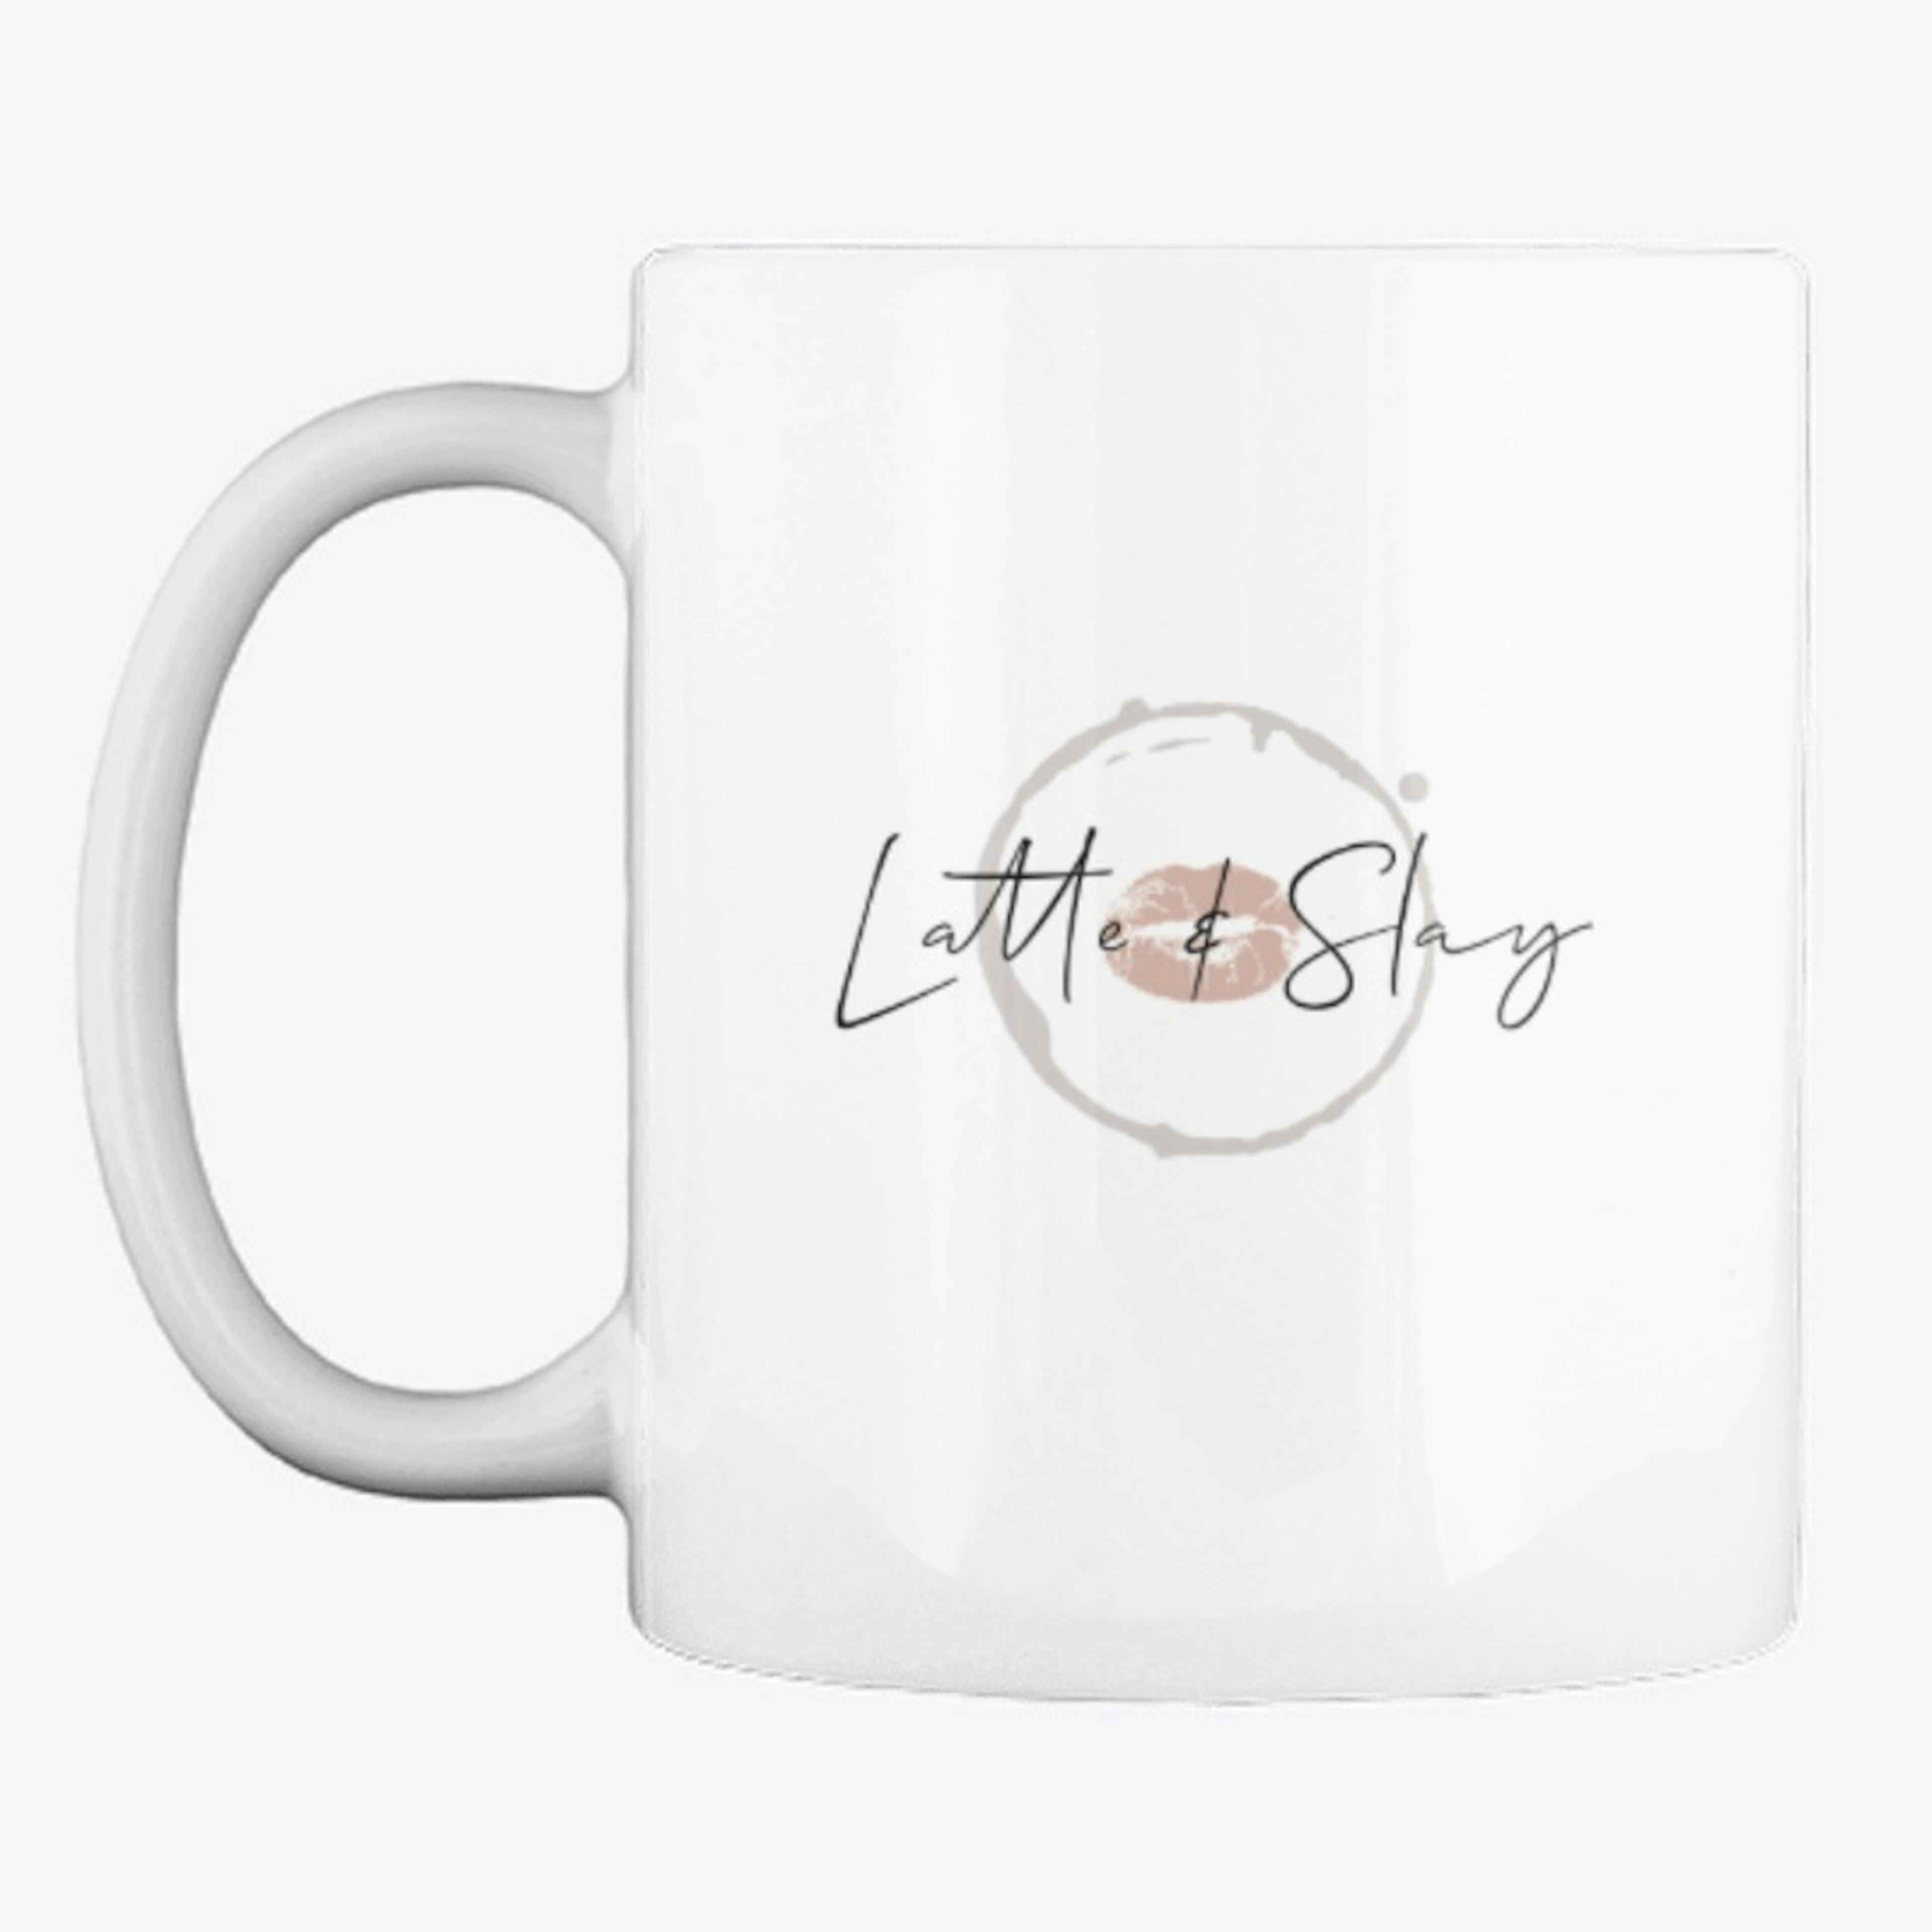 Latte & Slay Mug